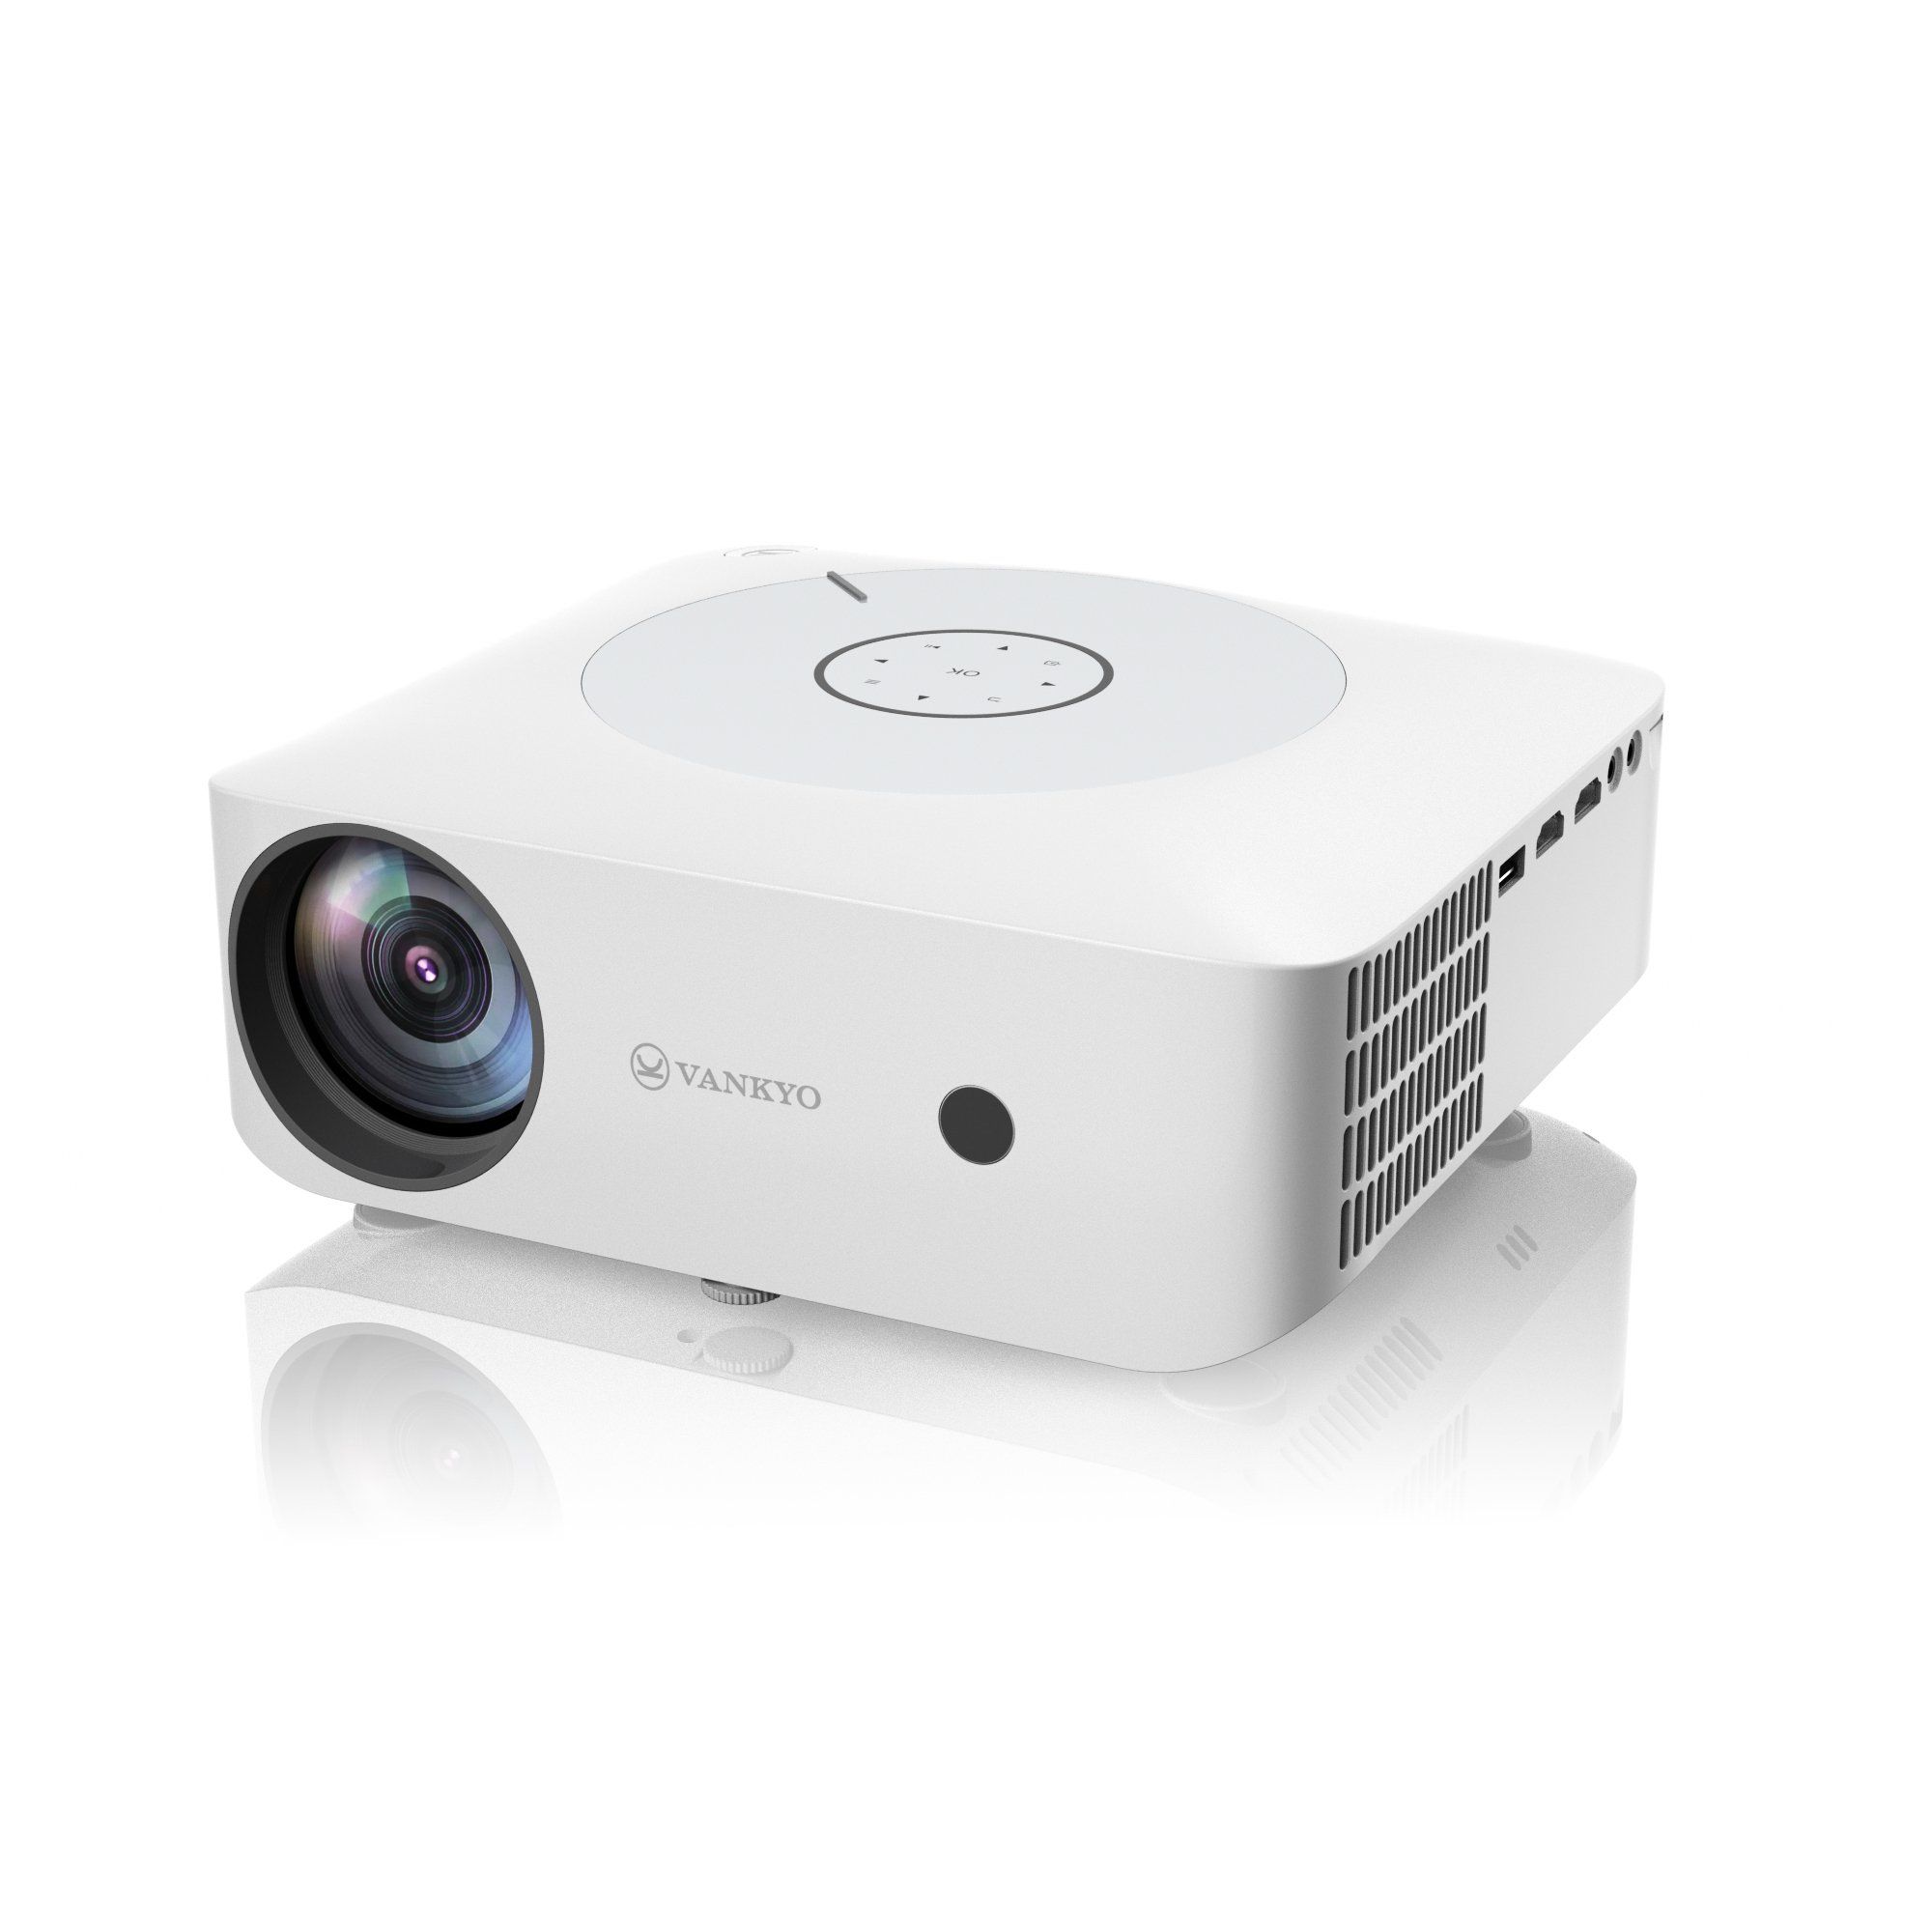 Vankyo Leisure 530W 1080P Full HD Projector